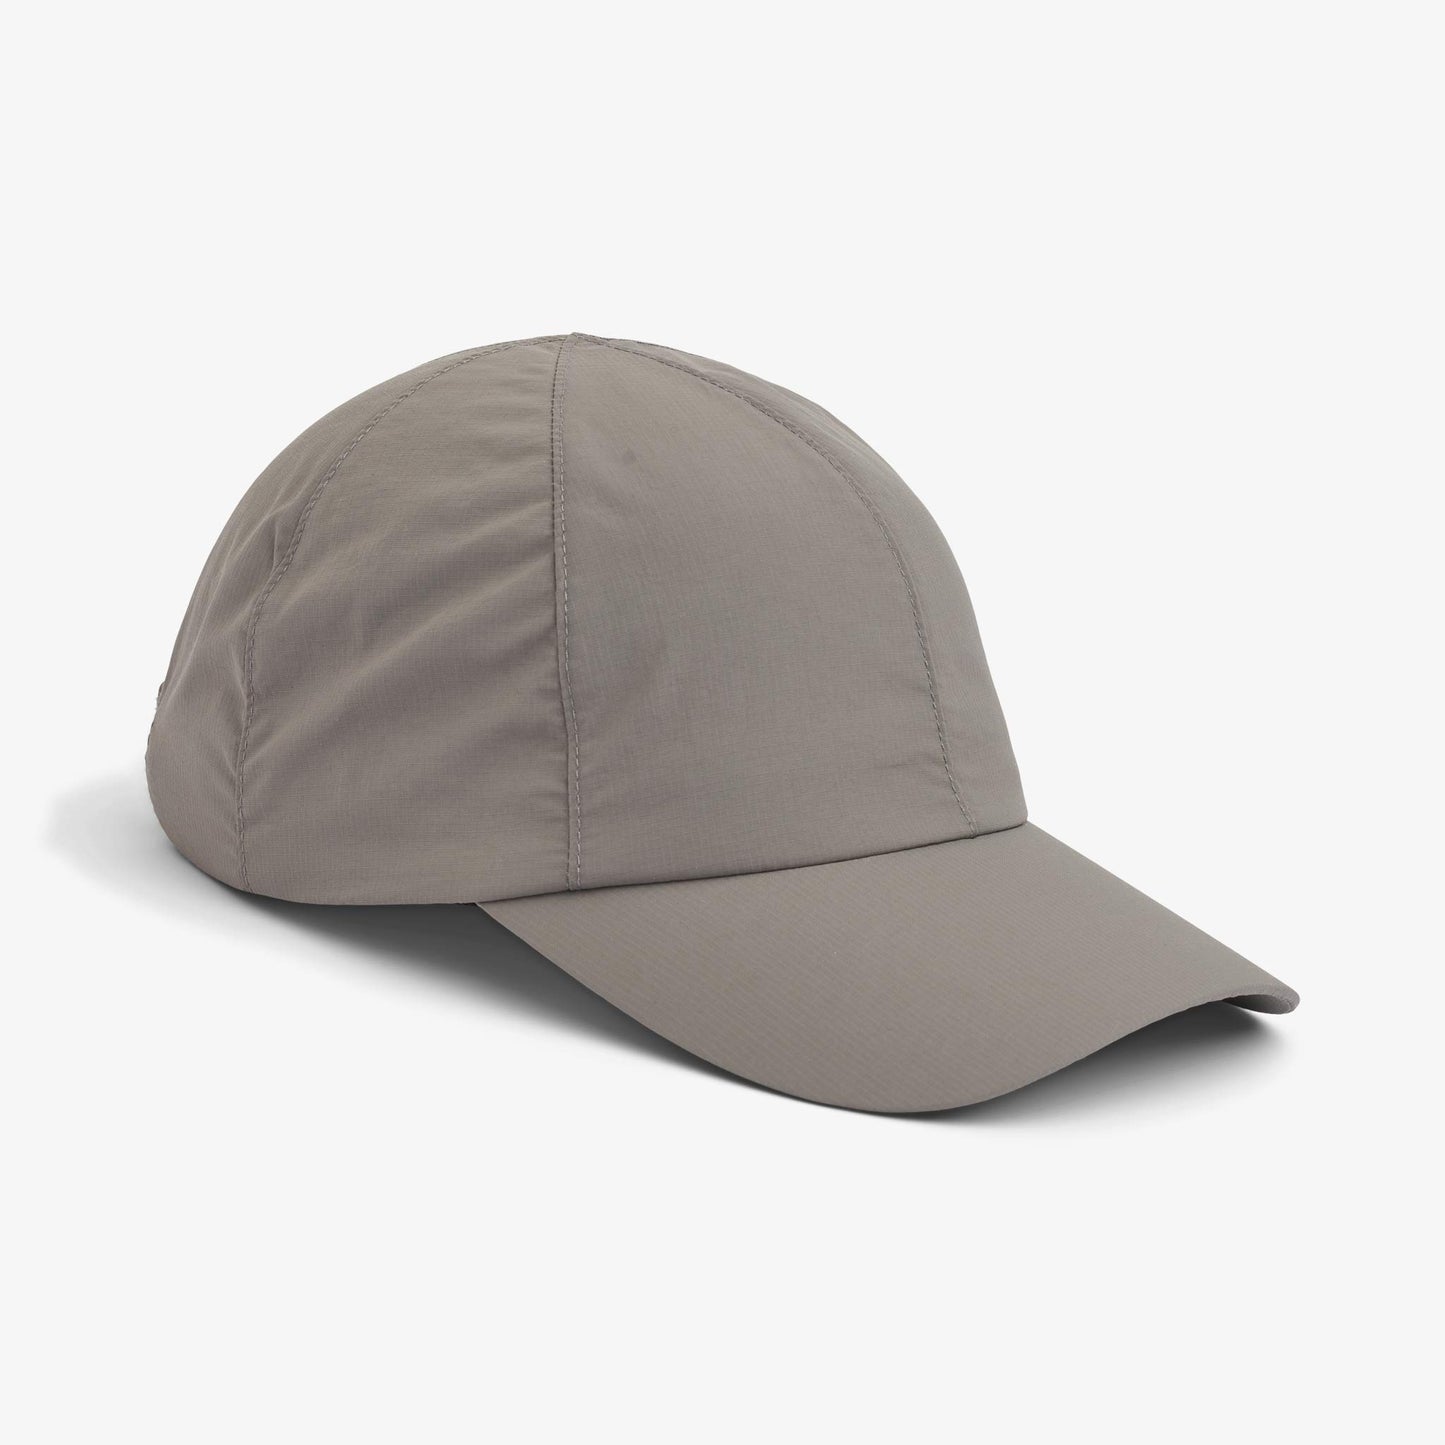 Upfront Nordic Headwear - Jim - Soft Low Baseball Cap - Ash - Headz Up 